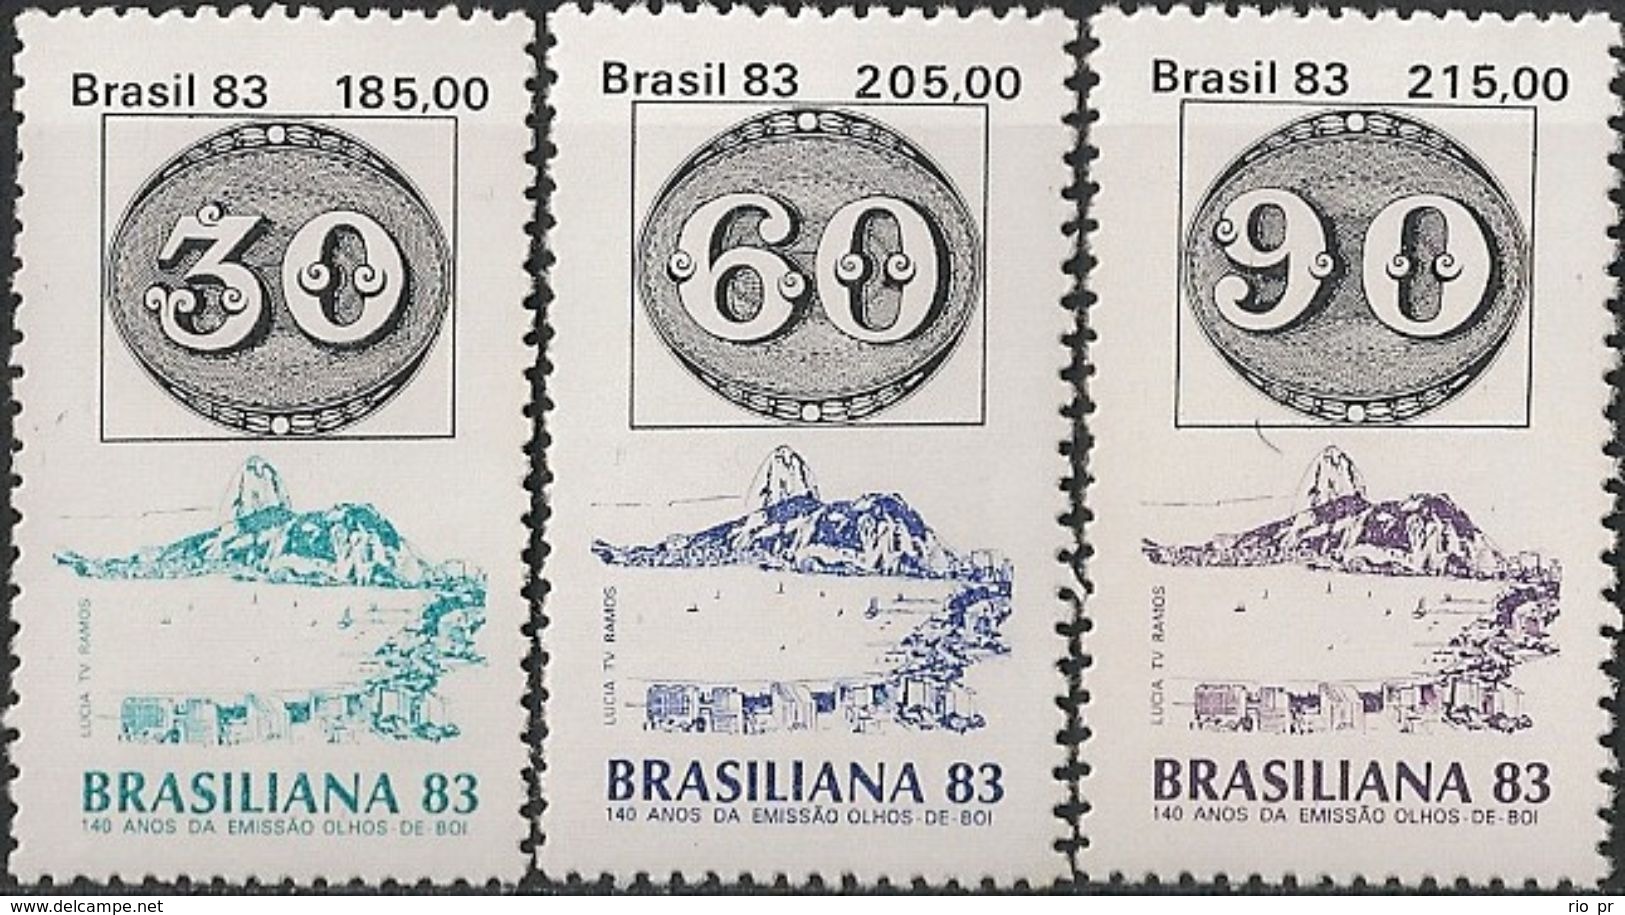 BRAZIL - COMPLETE SET BRASILIANA'83, RIO DE JANEIRO (BULL'S EYES STAMPS) 1983 - MNH - Briefmarkenausstellungen